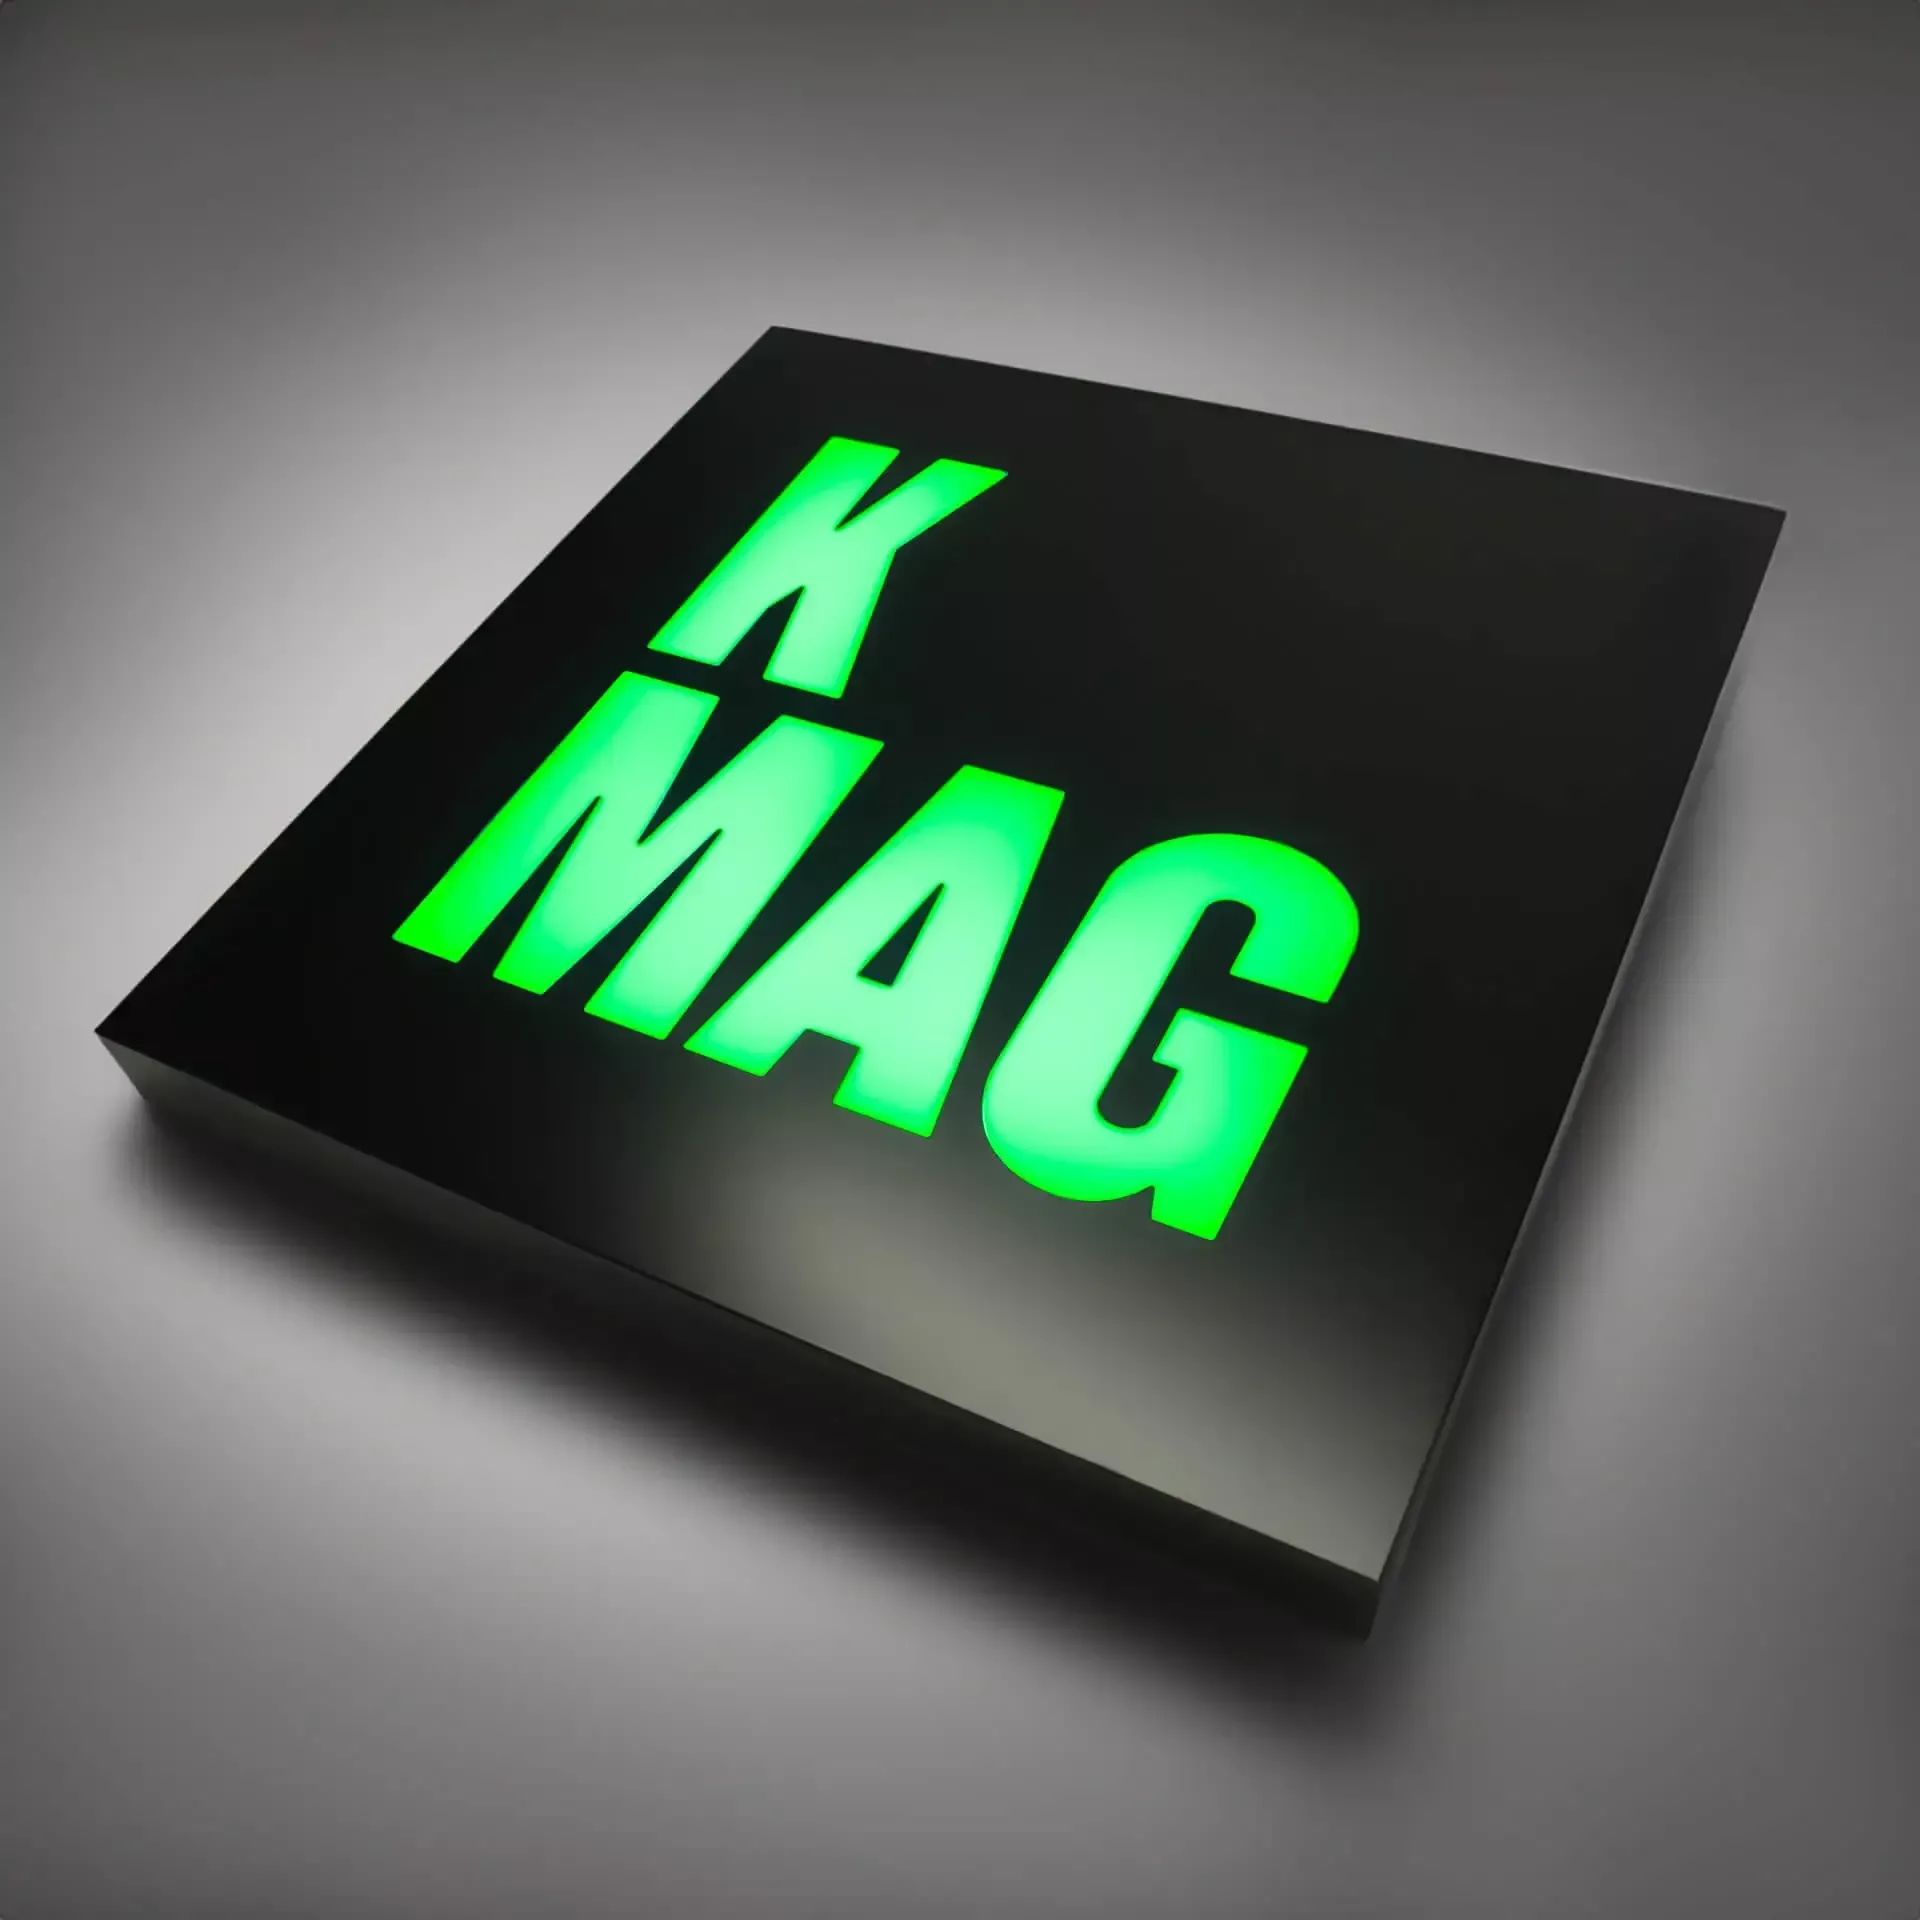 K MAG - Podświetlany kaseton LED